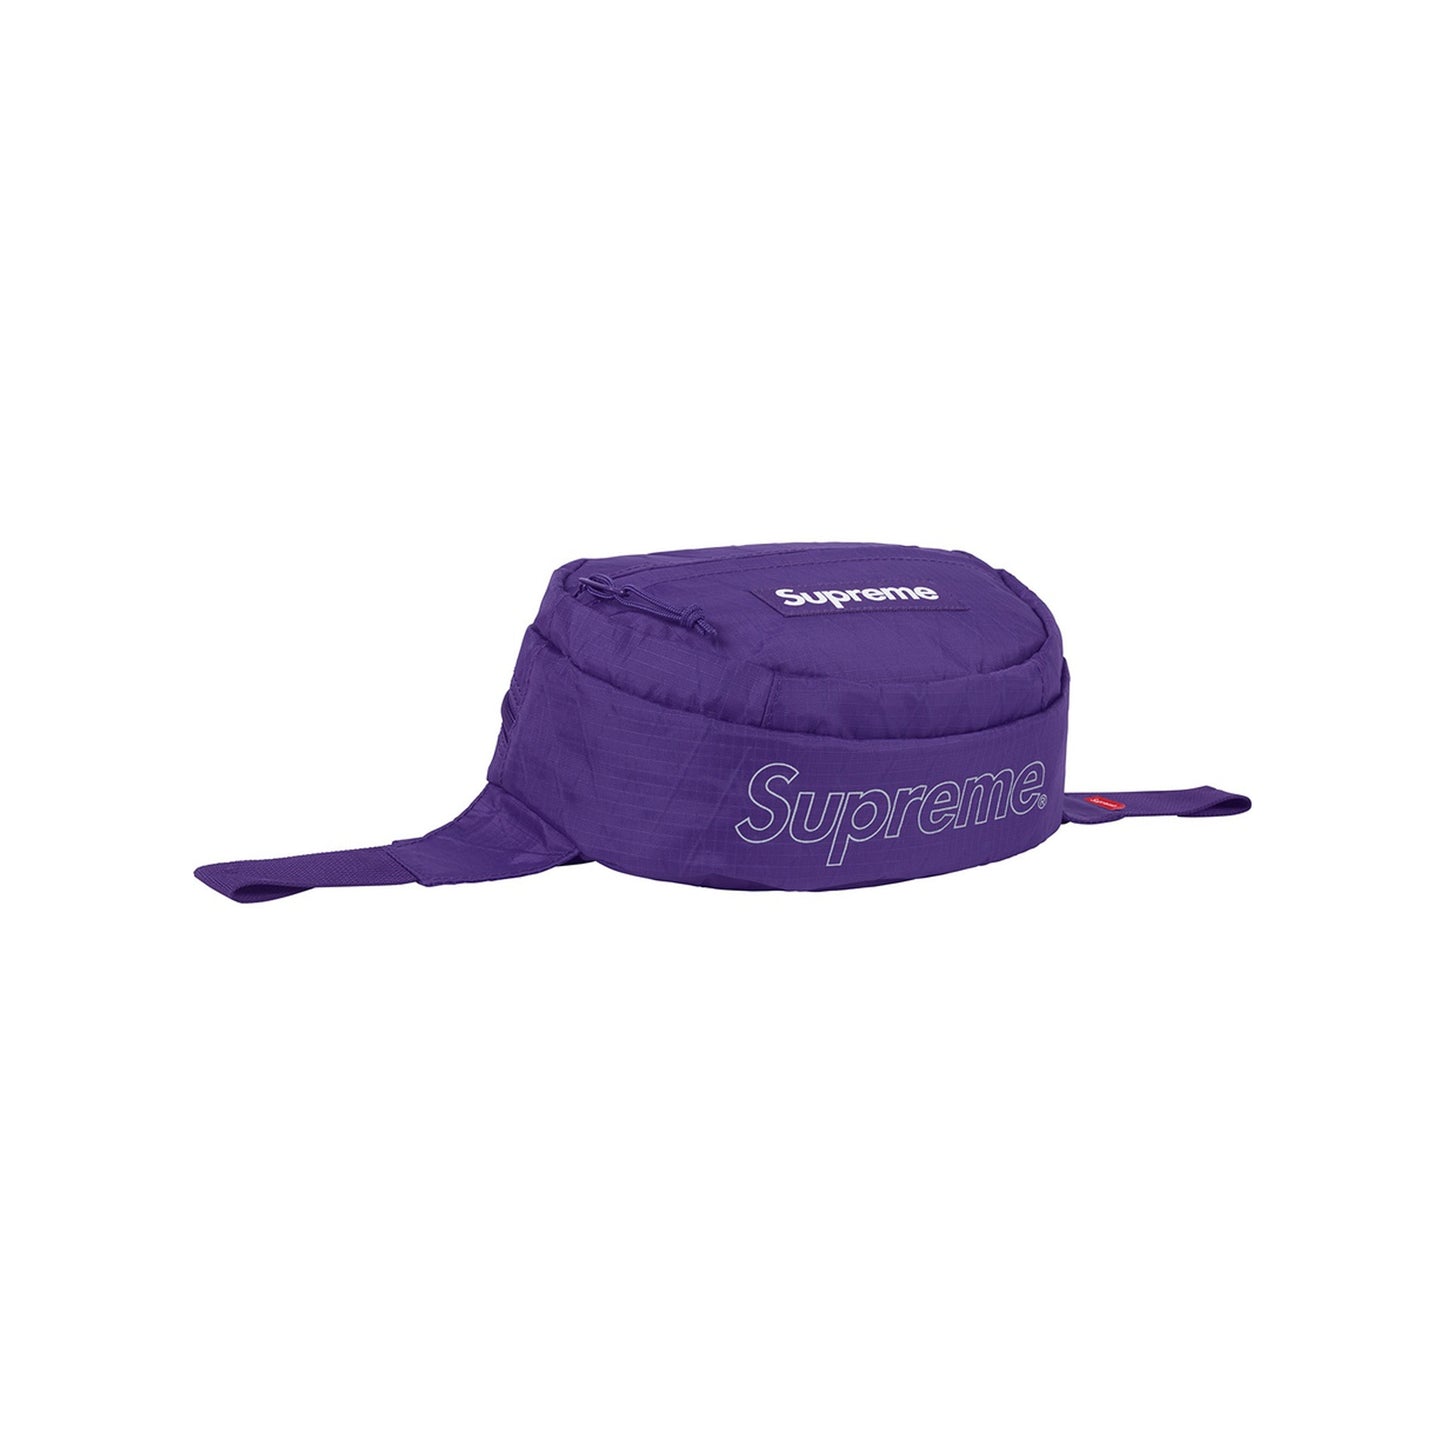 Supreme Waist Bag Purple (FW18)